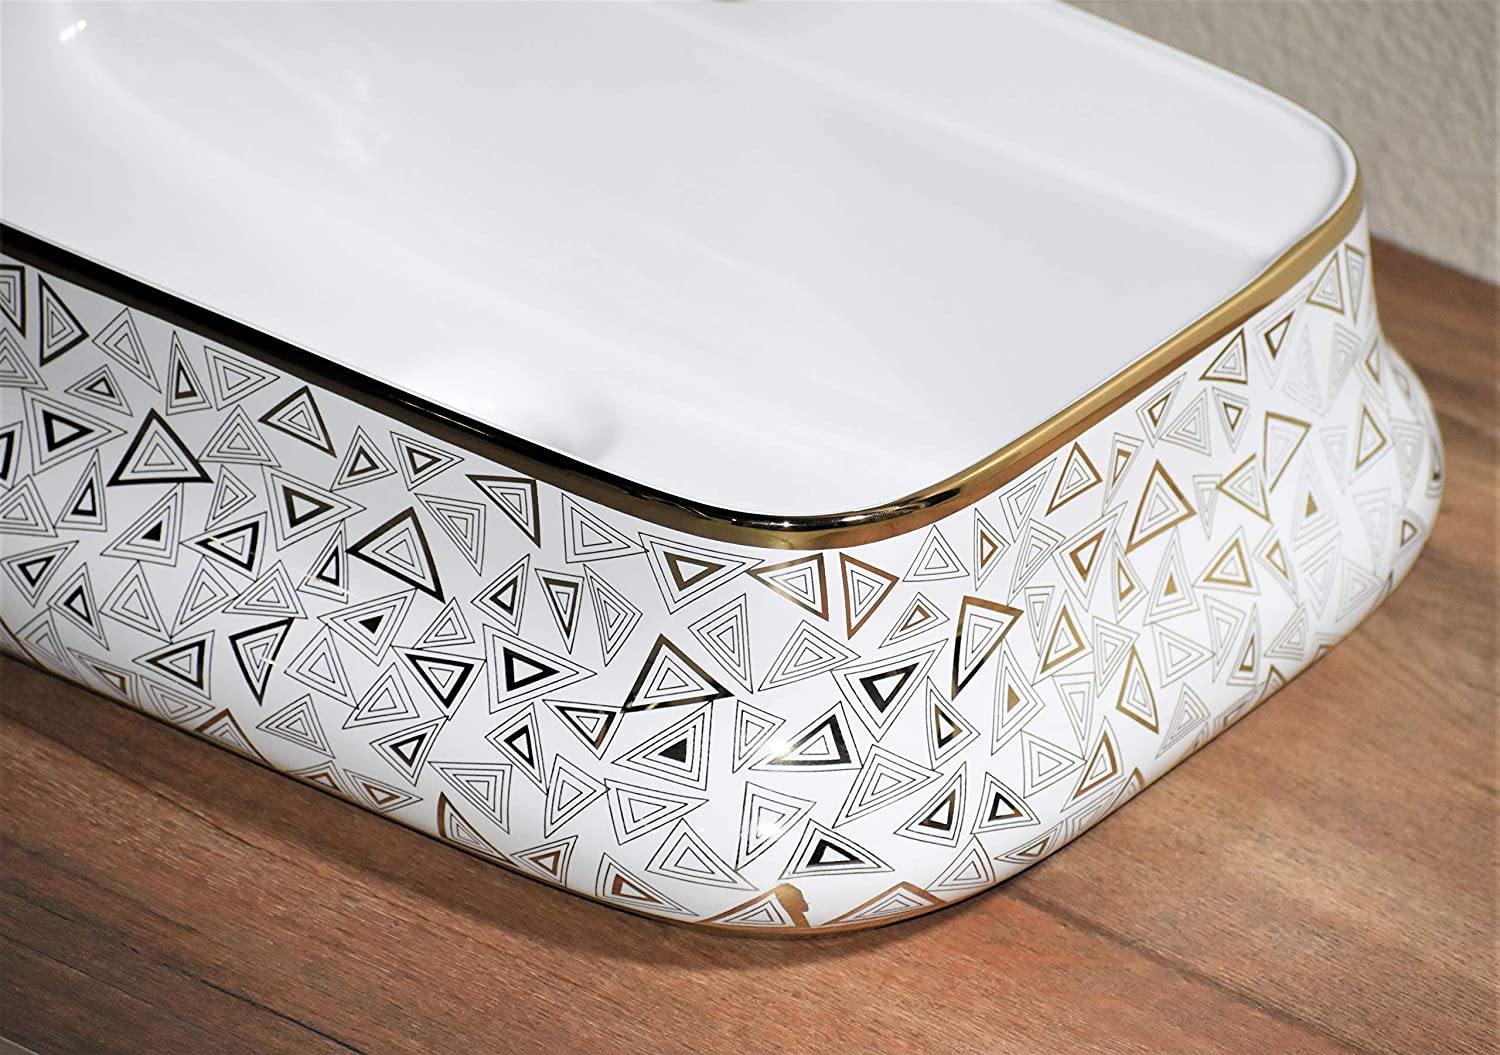 Ceramic Premium Desisgner Table Top Over Counter Vessel Sink Wash Basin for Bathroom 20 X 14 X 5 Inch Gold White Basin For Bathroom - Bath Outlet